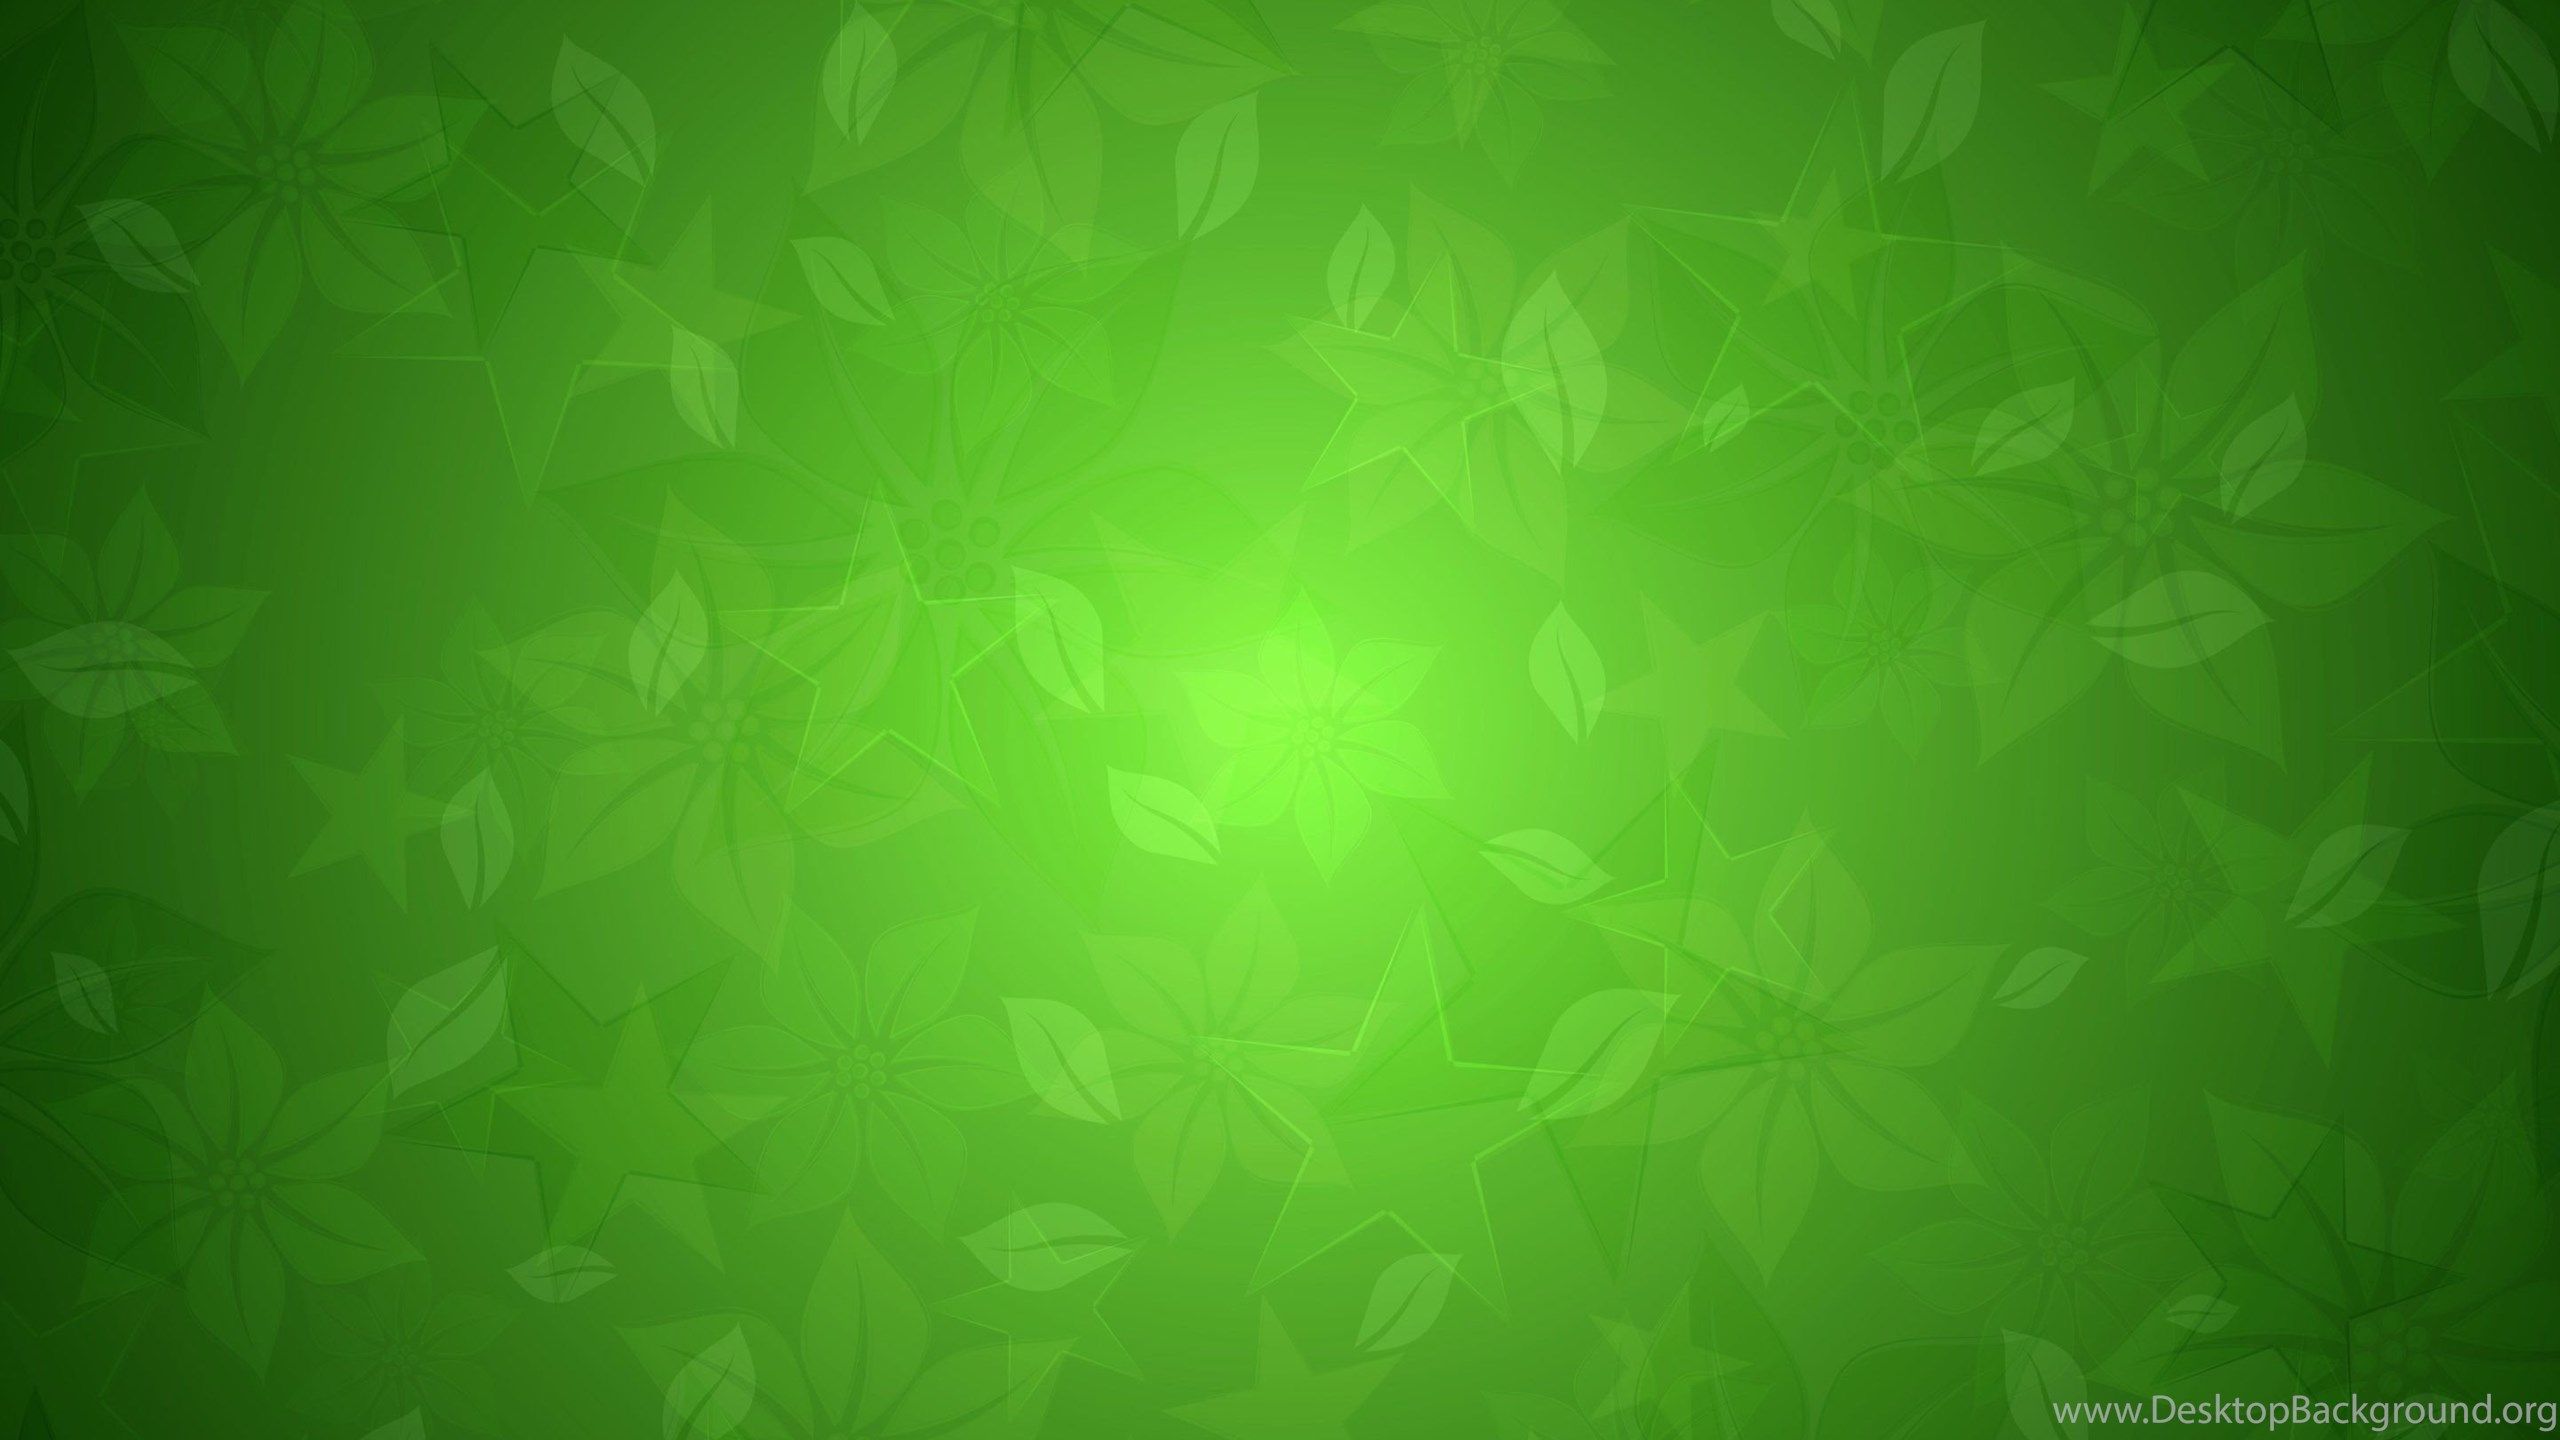 HD Quality Green Wallpaper For Desktop Theme 1 SiWallpaper 12642 Desktop Background